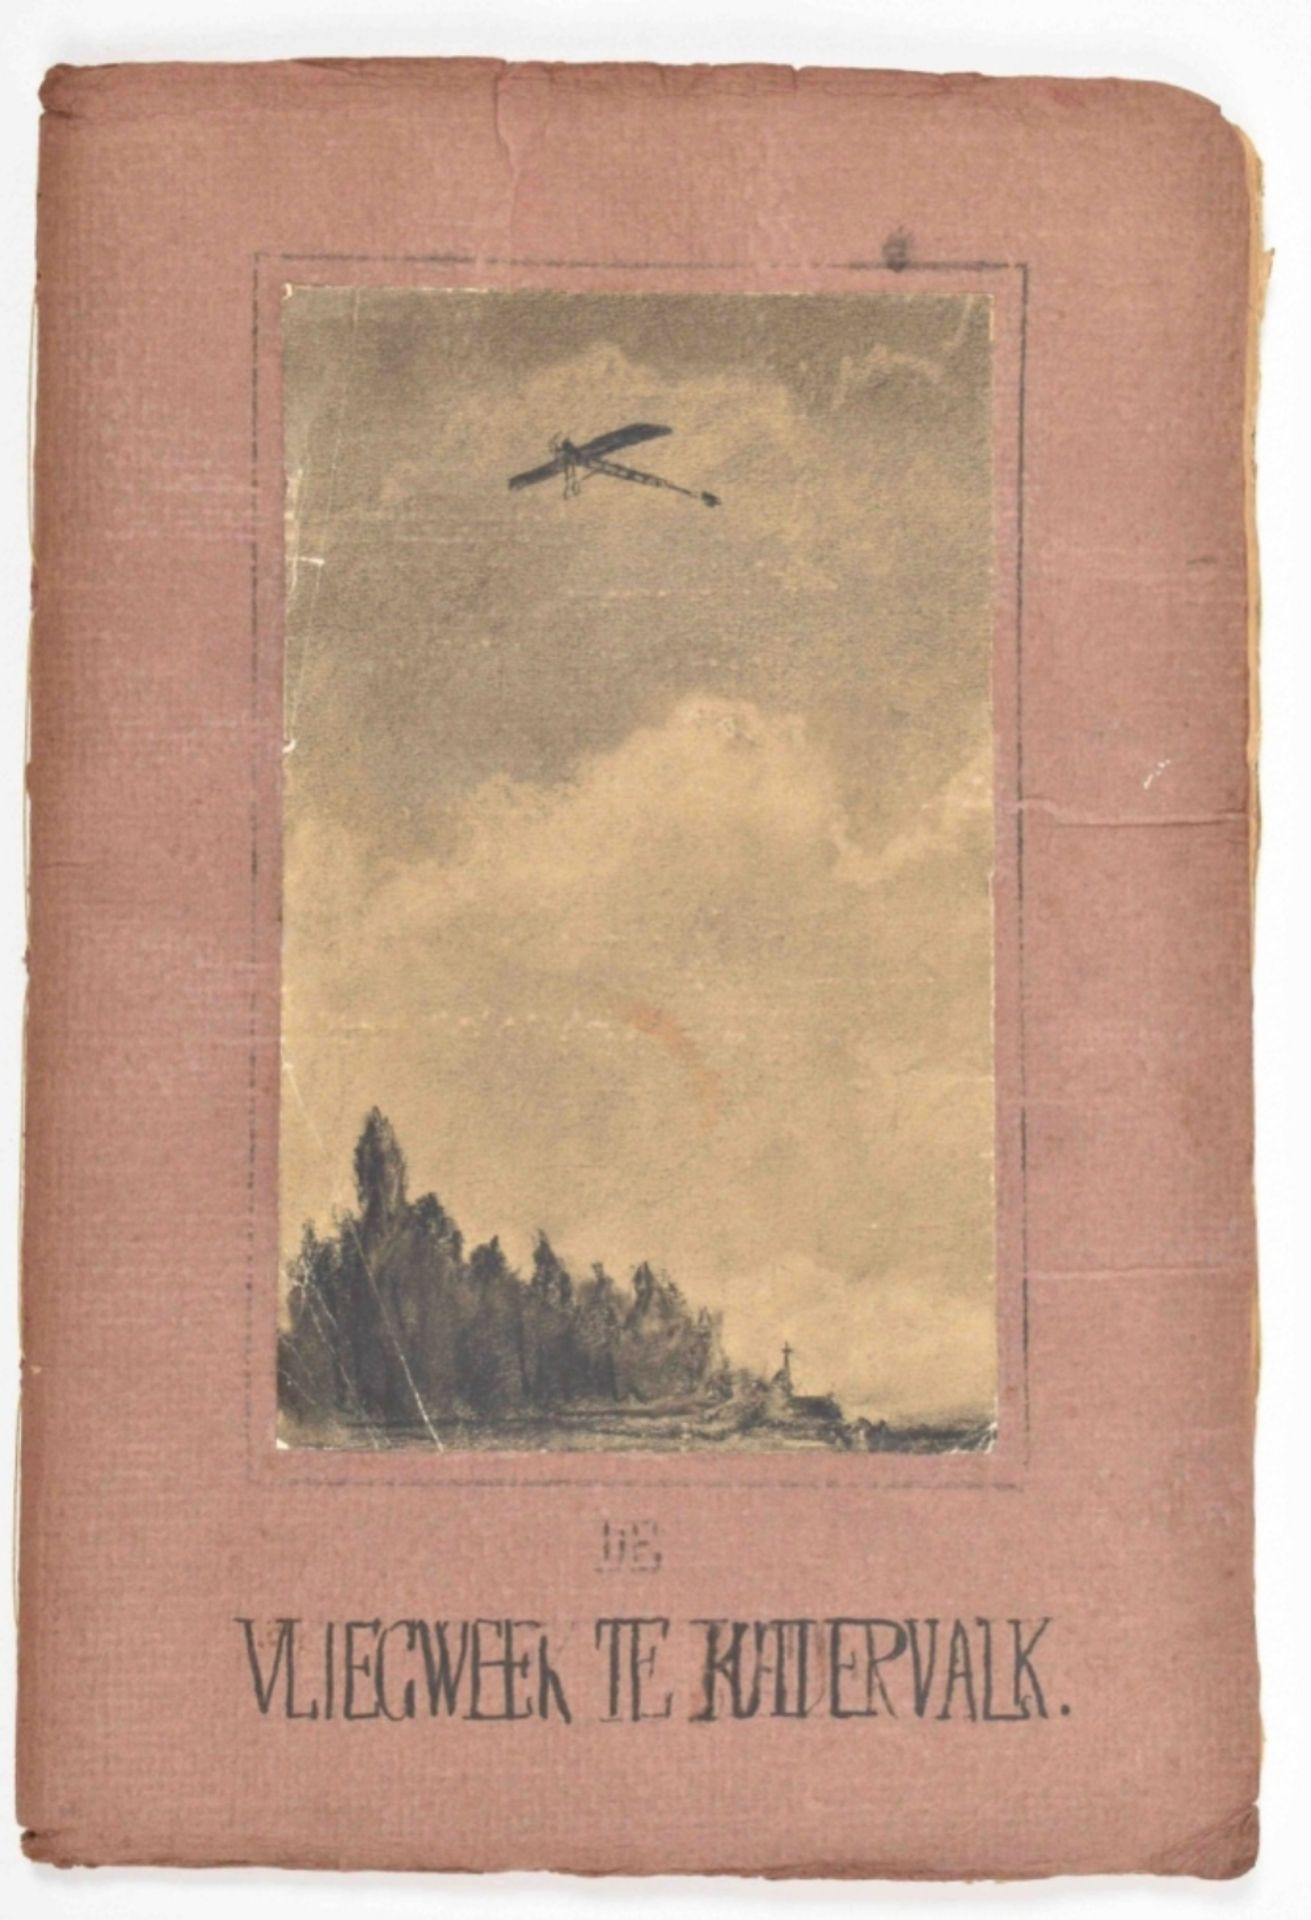 "De vliegweek te Katervalk. Of Het boek van moed a.d. 1911."